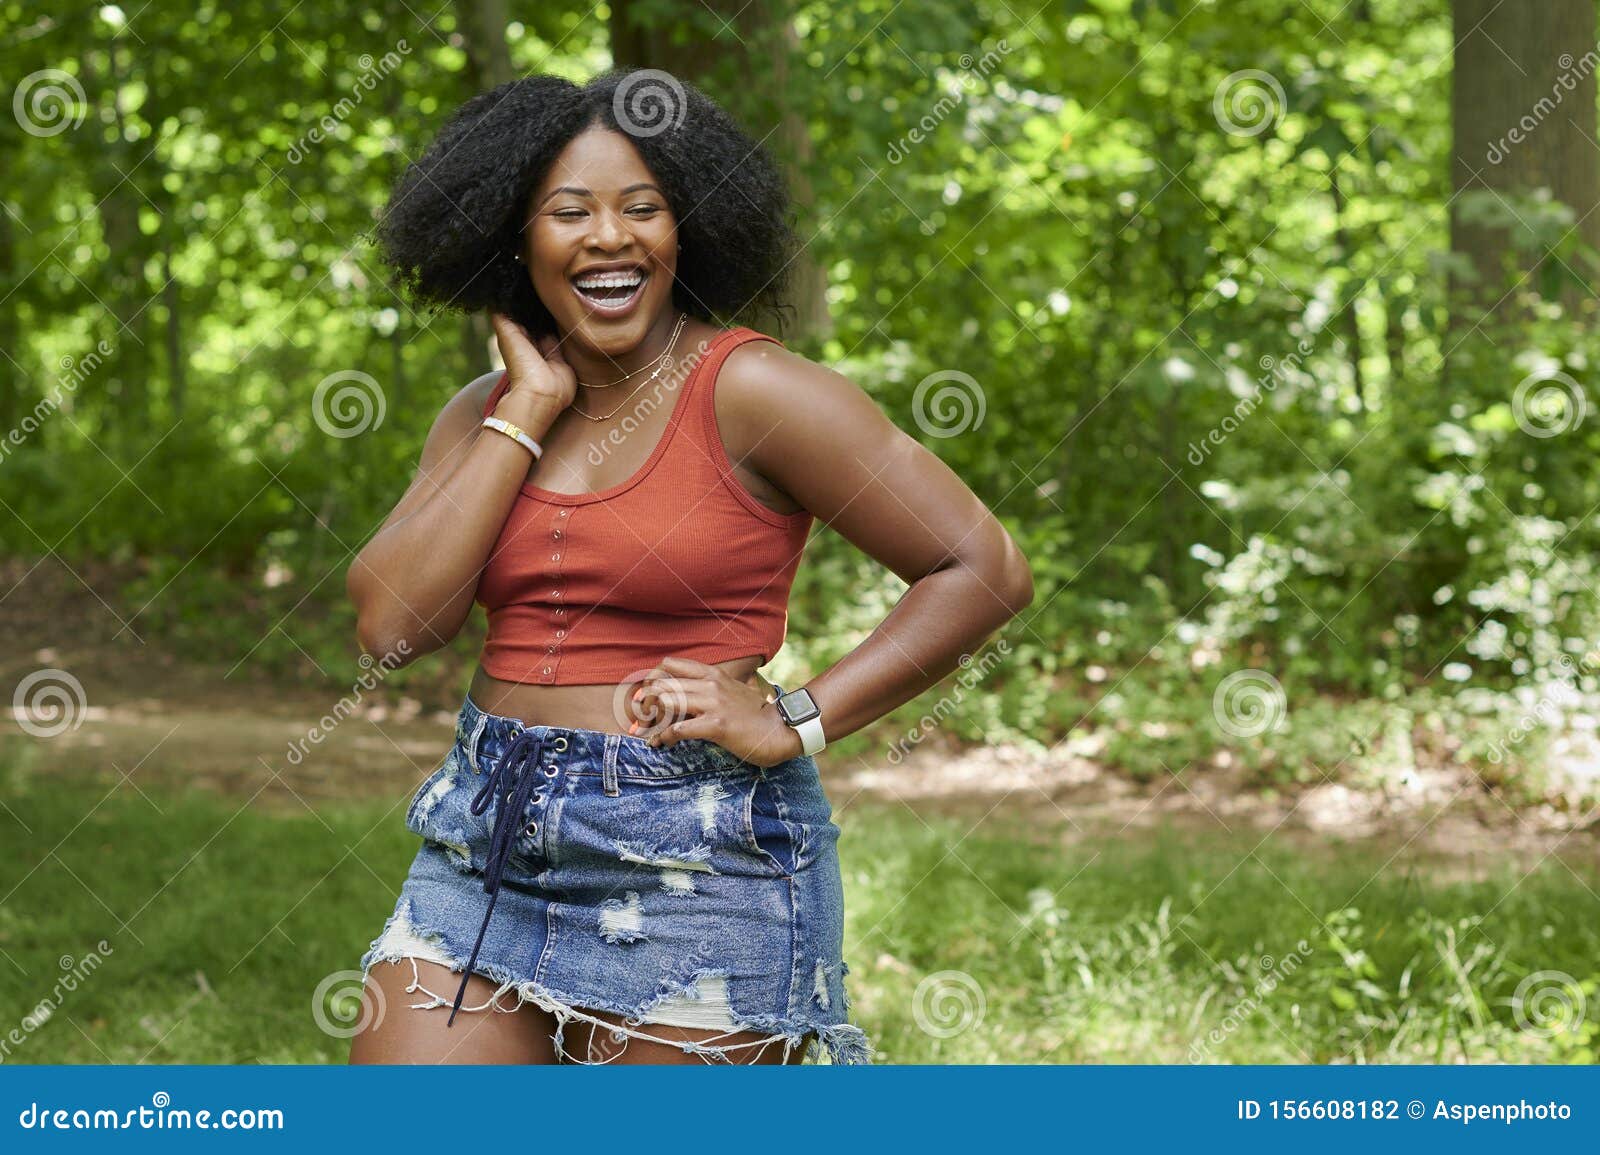 Beautiful Young Black Woman Poses in Orange Tank Top and Denim ...